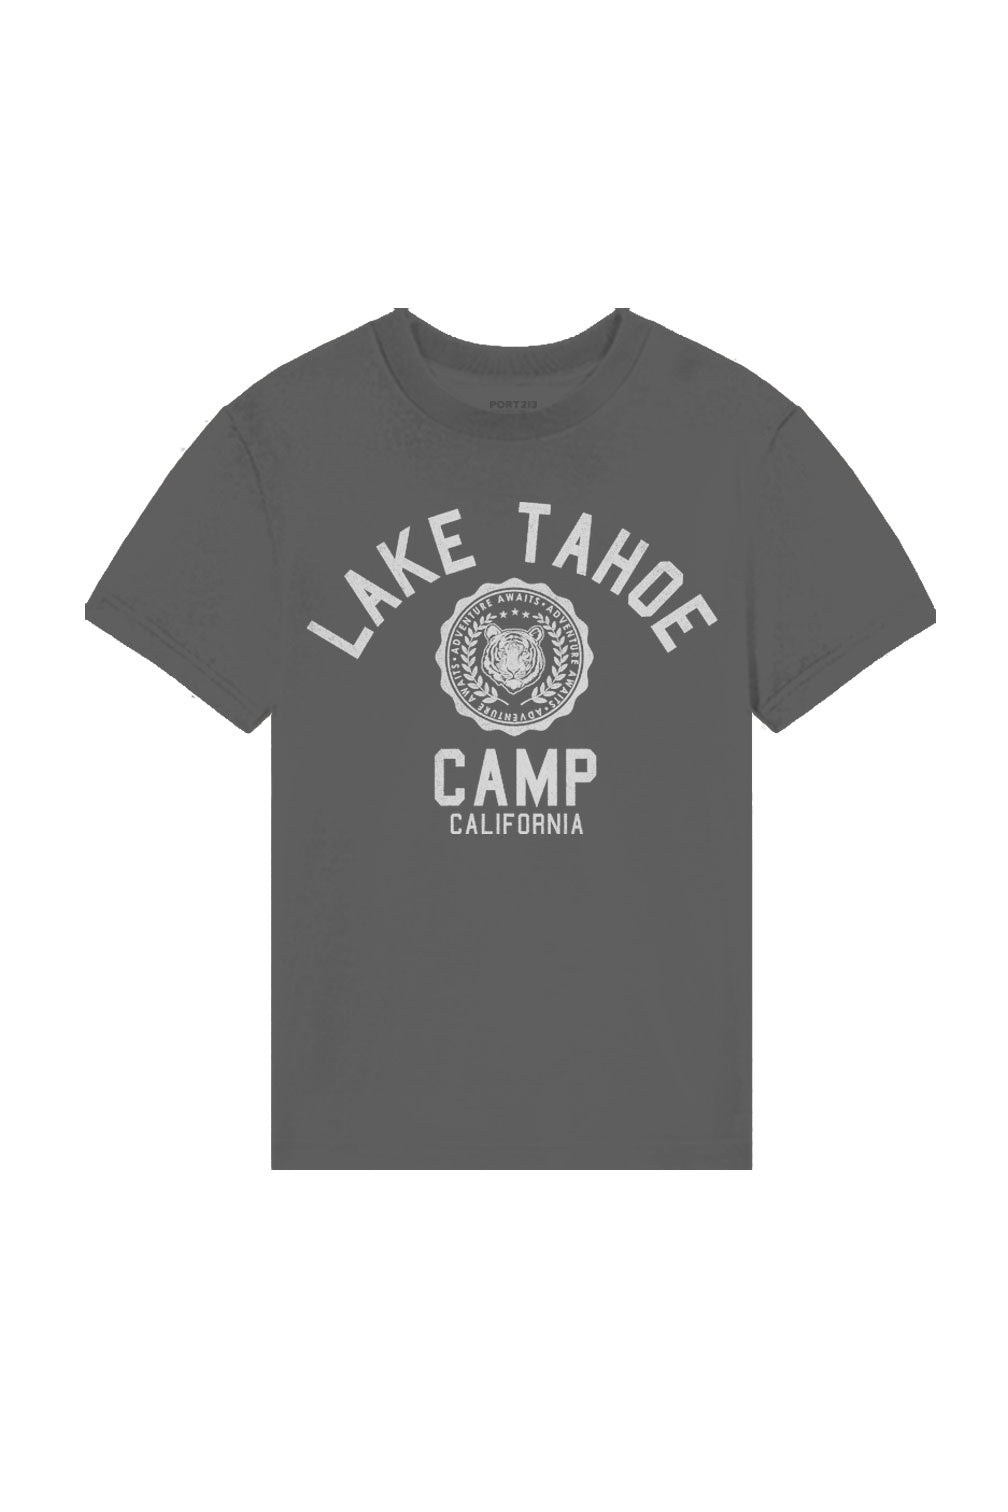 LAKE TAHOE CAMP TEE